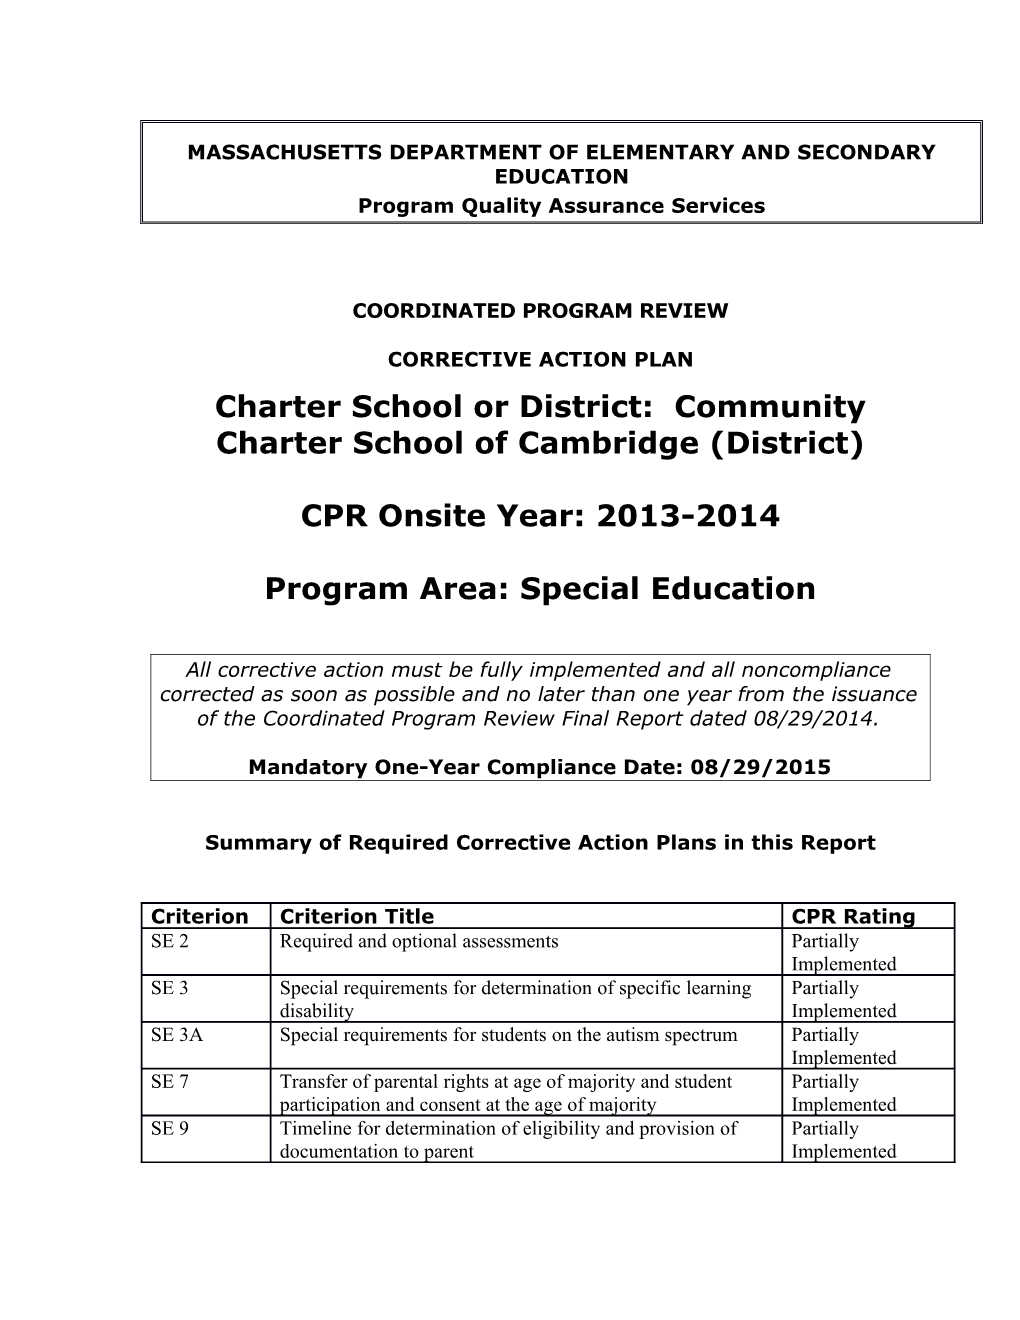 Community Charter School of Cambridge CAP 2014